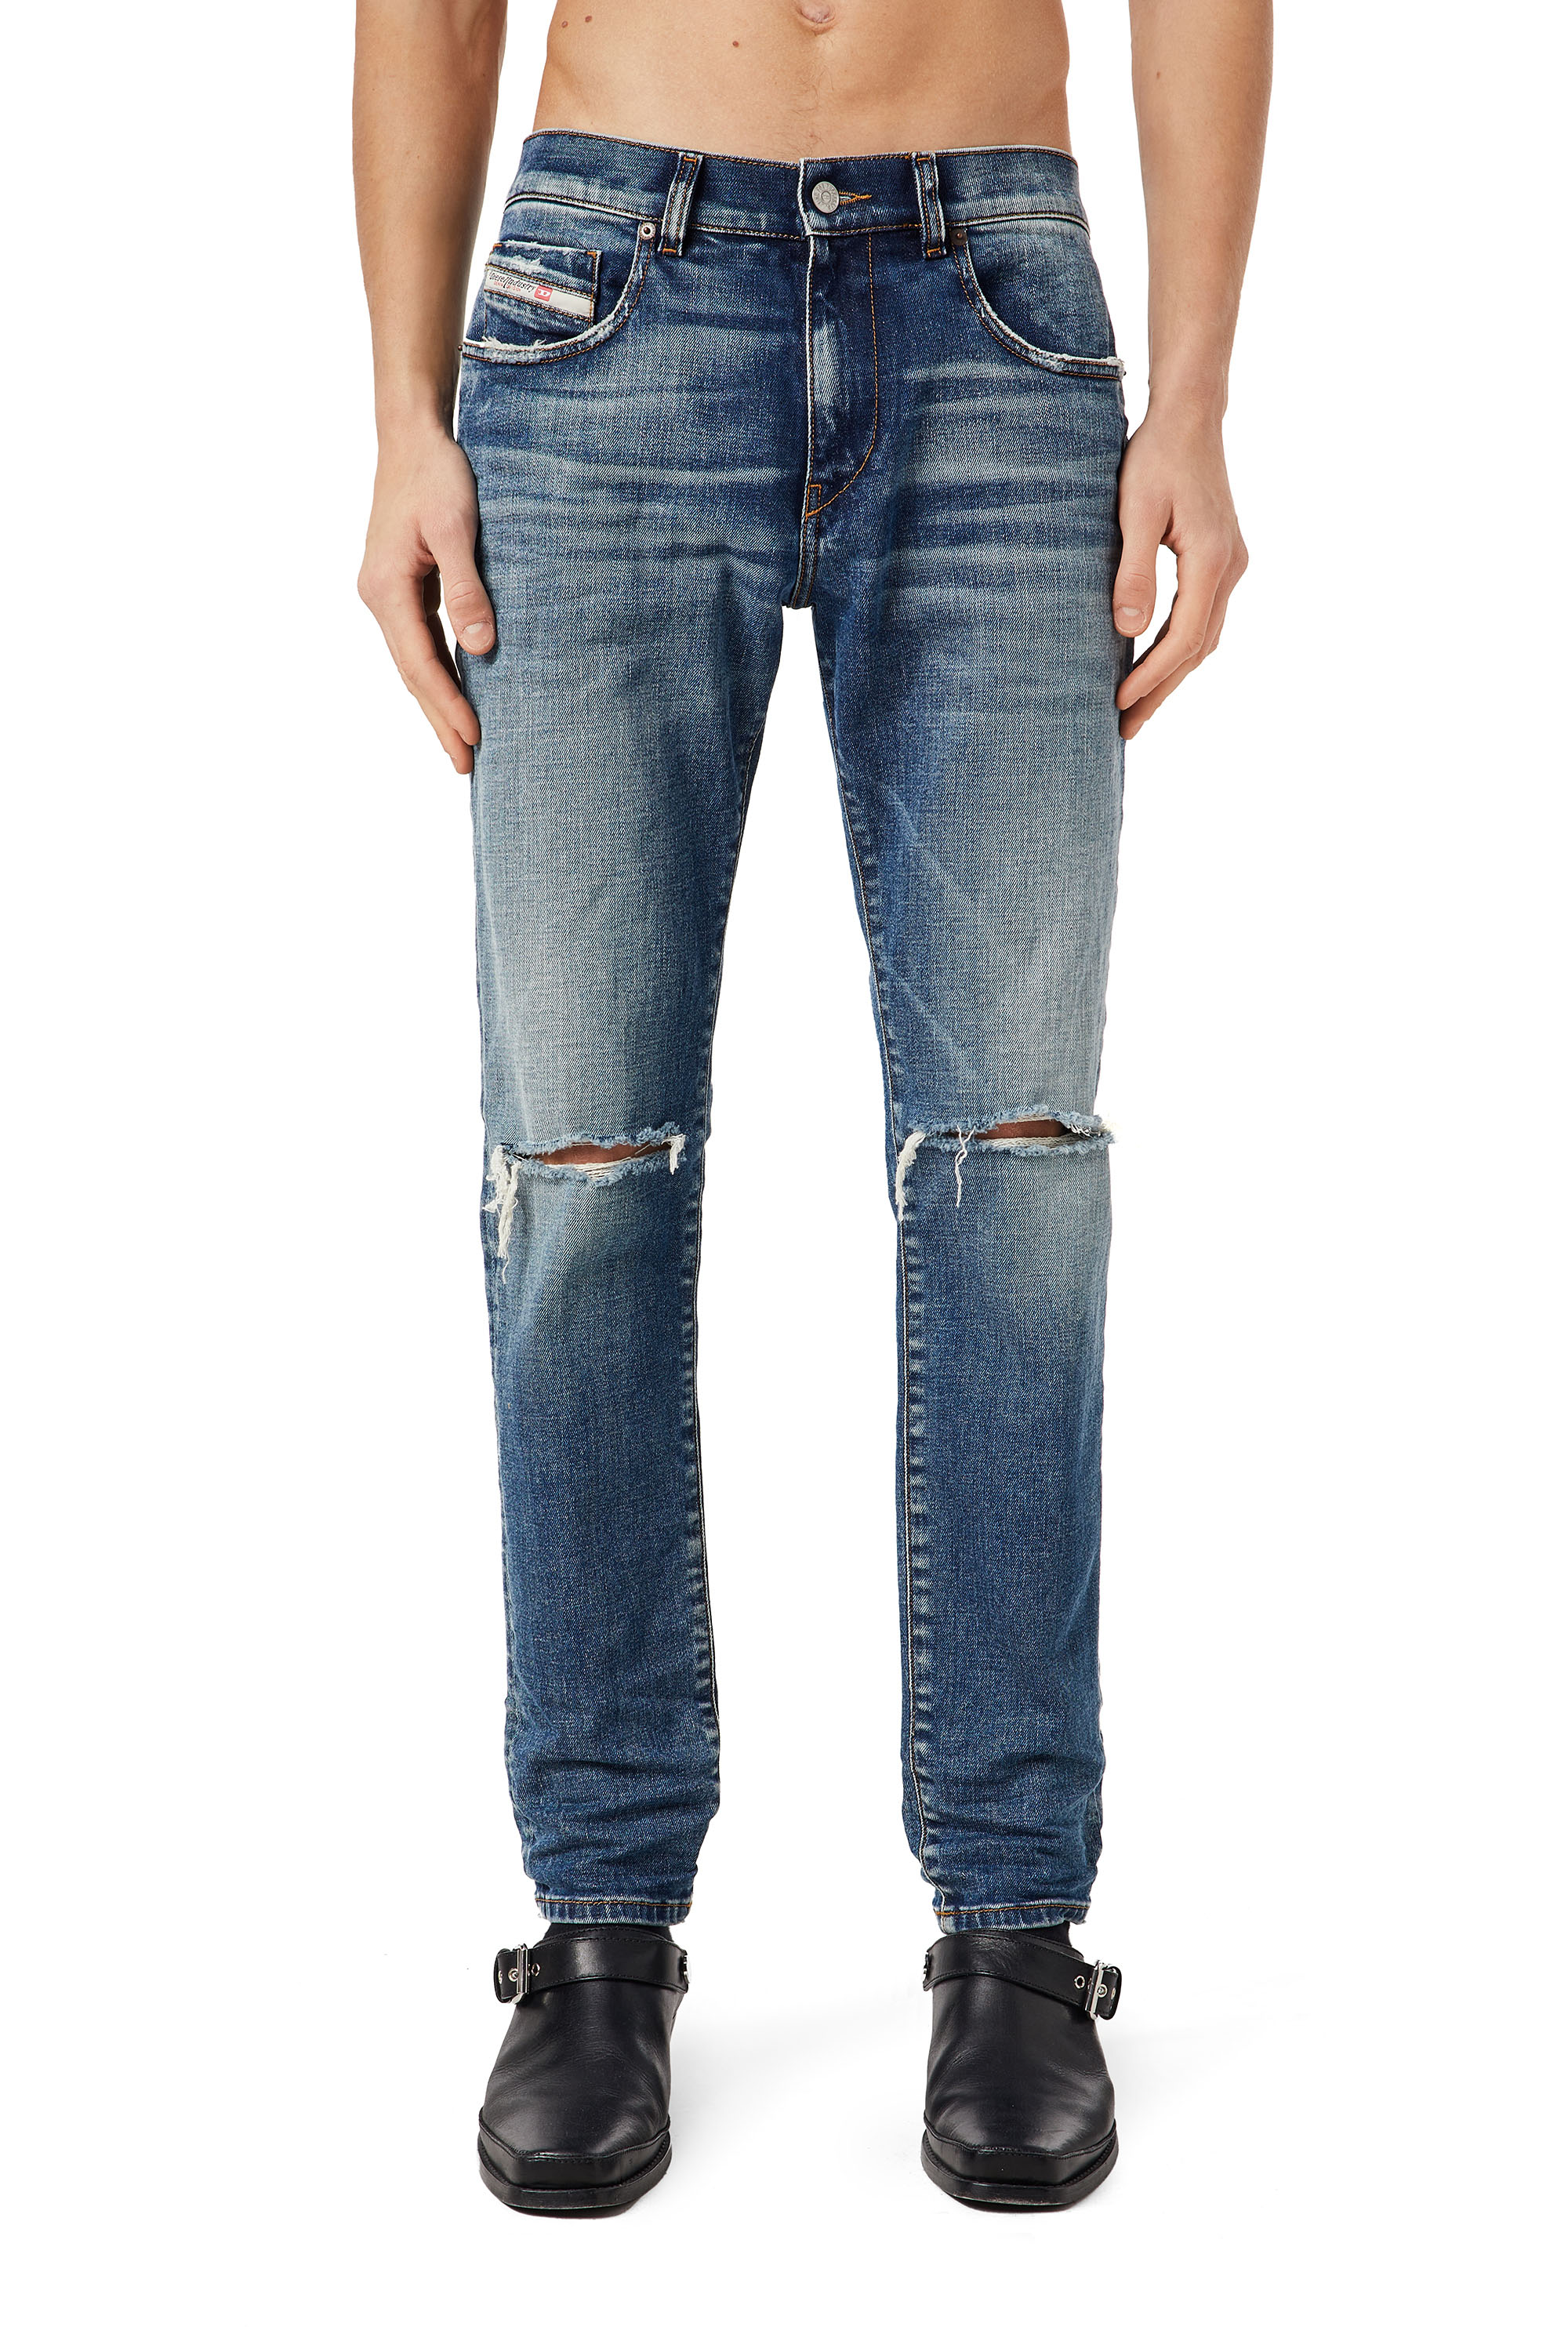 2019 D-STRUKT 09C87 Slim Jeans, Medium blue - Jeans